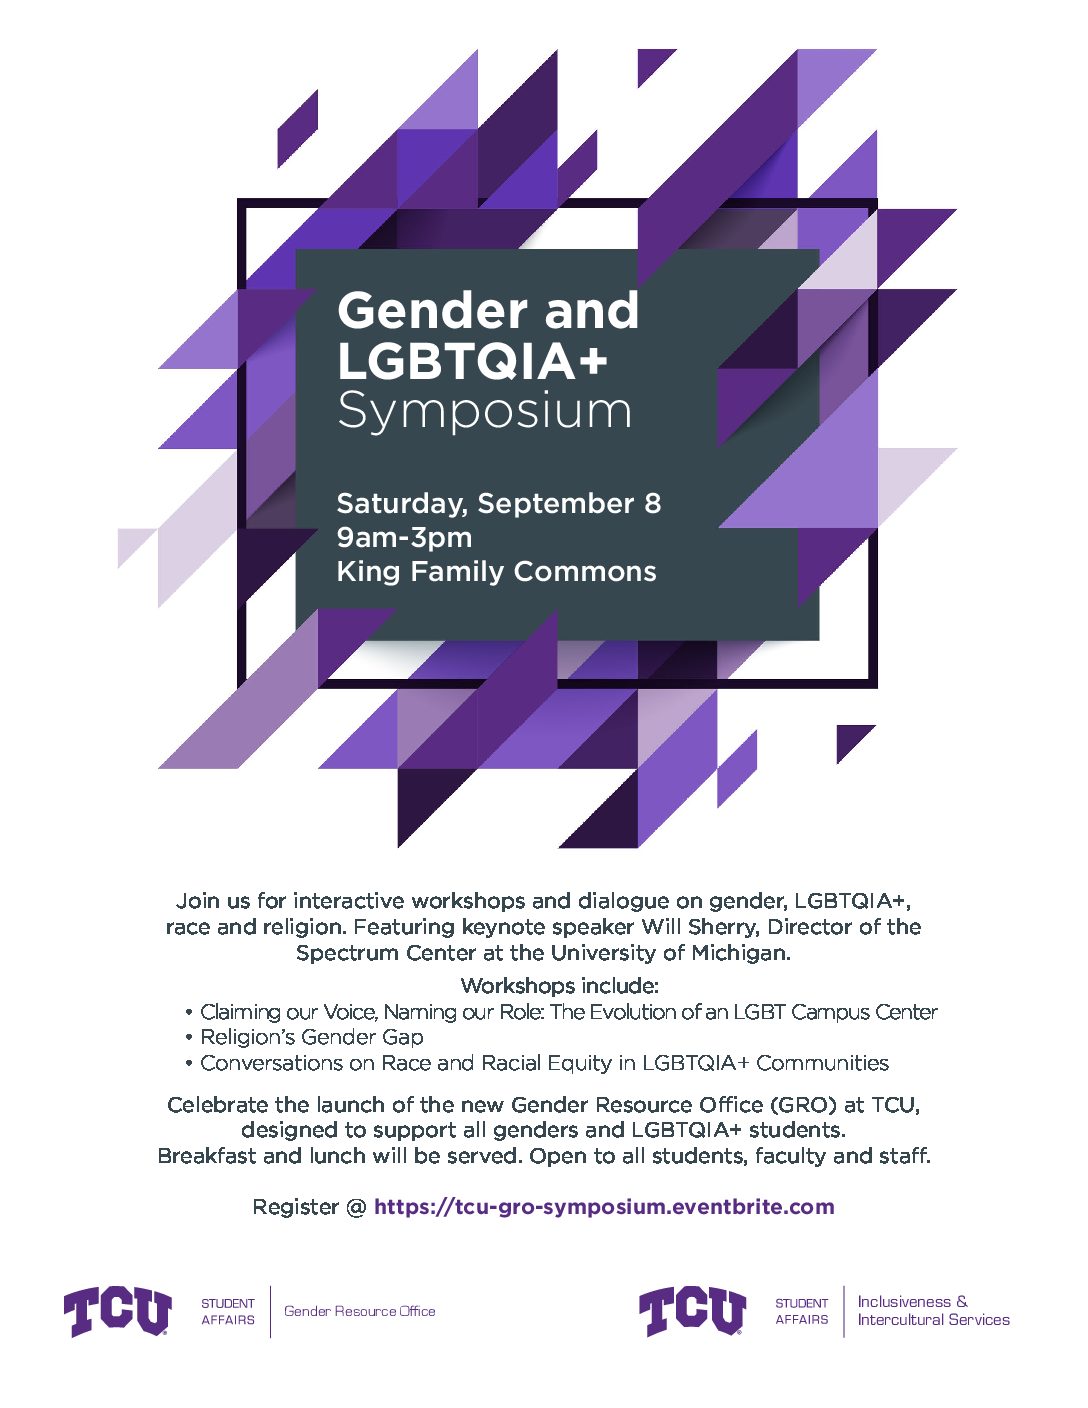 Gender and LGBTQIA Symposium 2